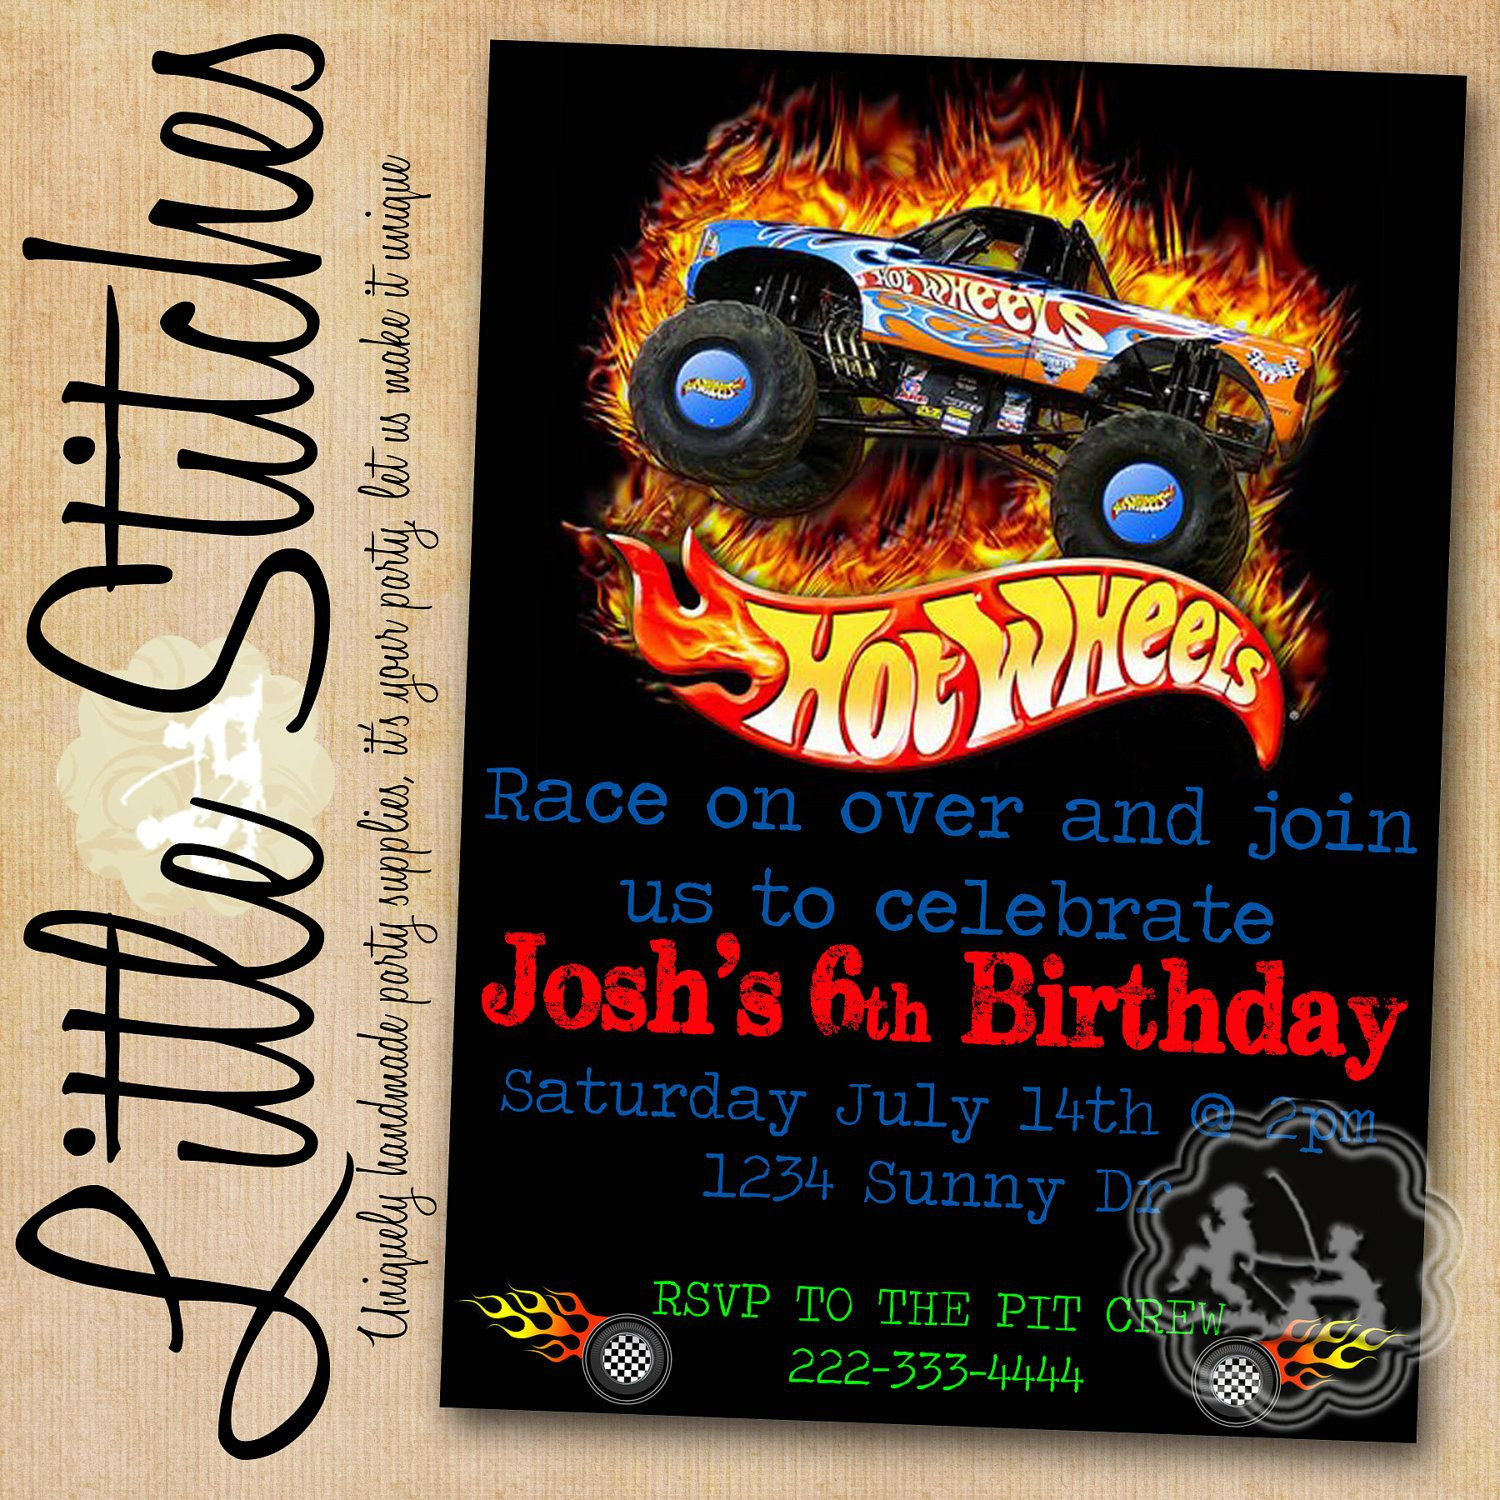 Hot Wheels Birthday Invitations
 Hot Wheels Birthday Invitation $11 00 via Etsy